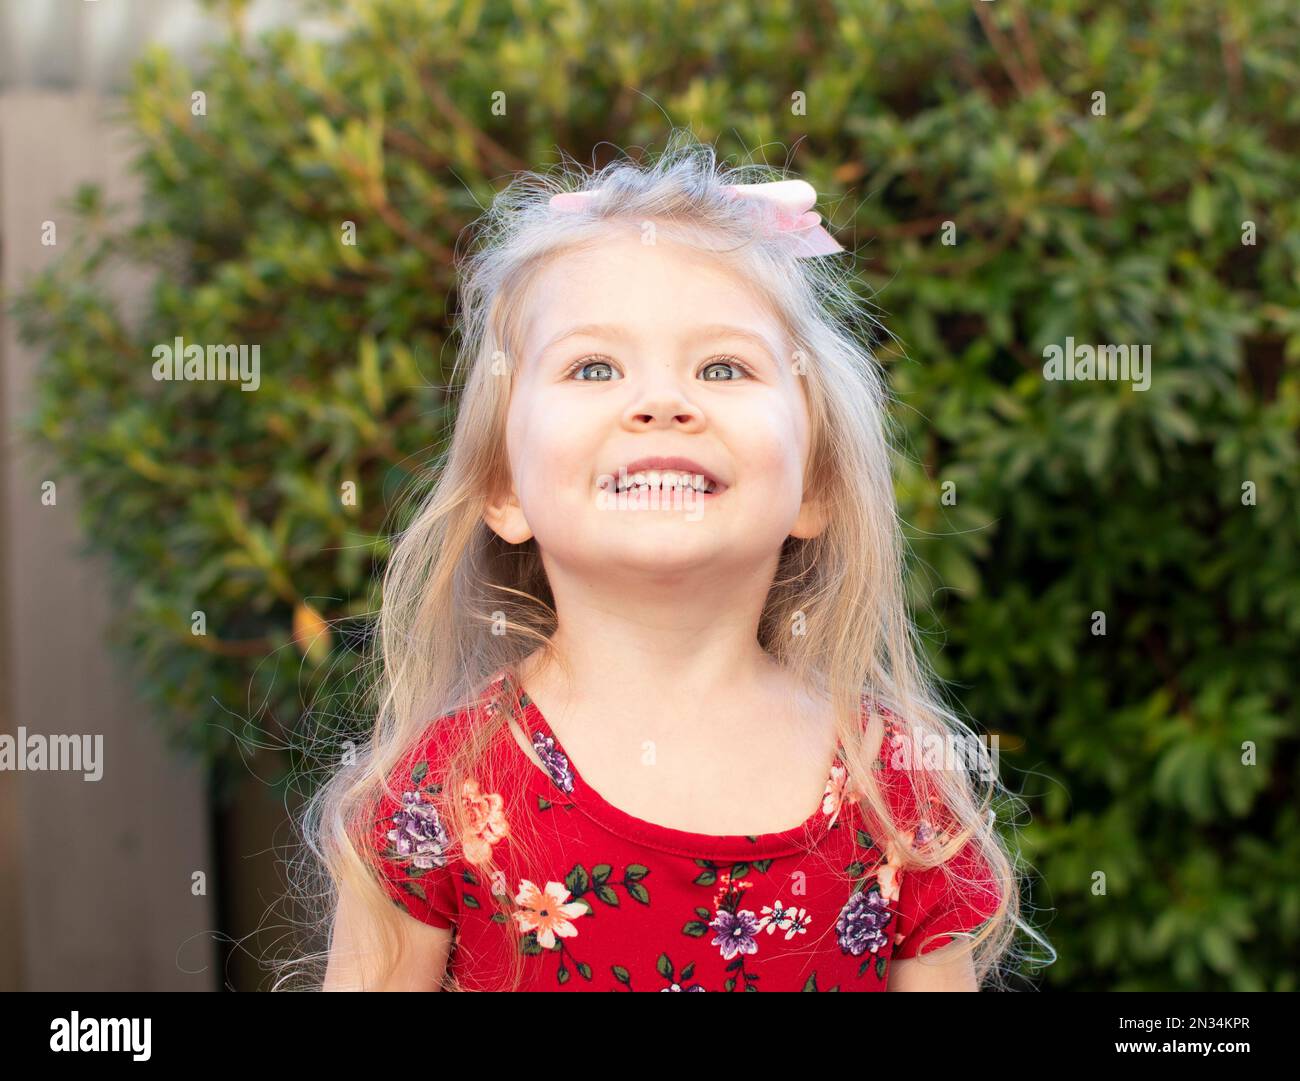 A hopeful smiling little girl Stock Photo